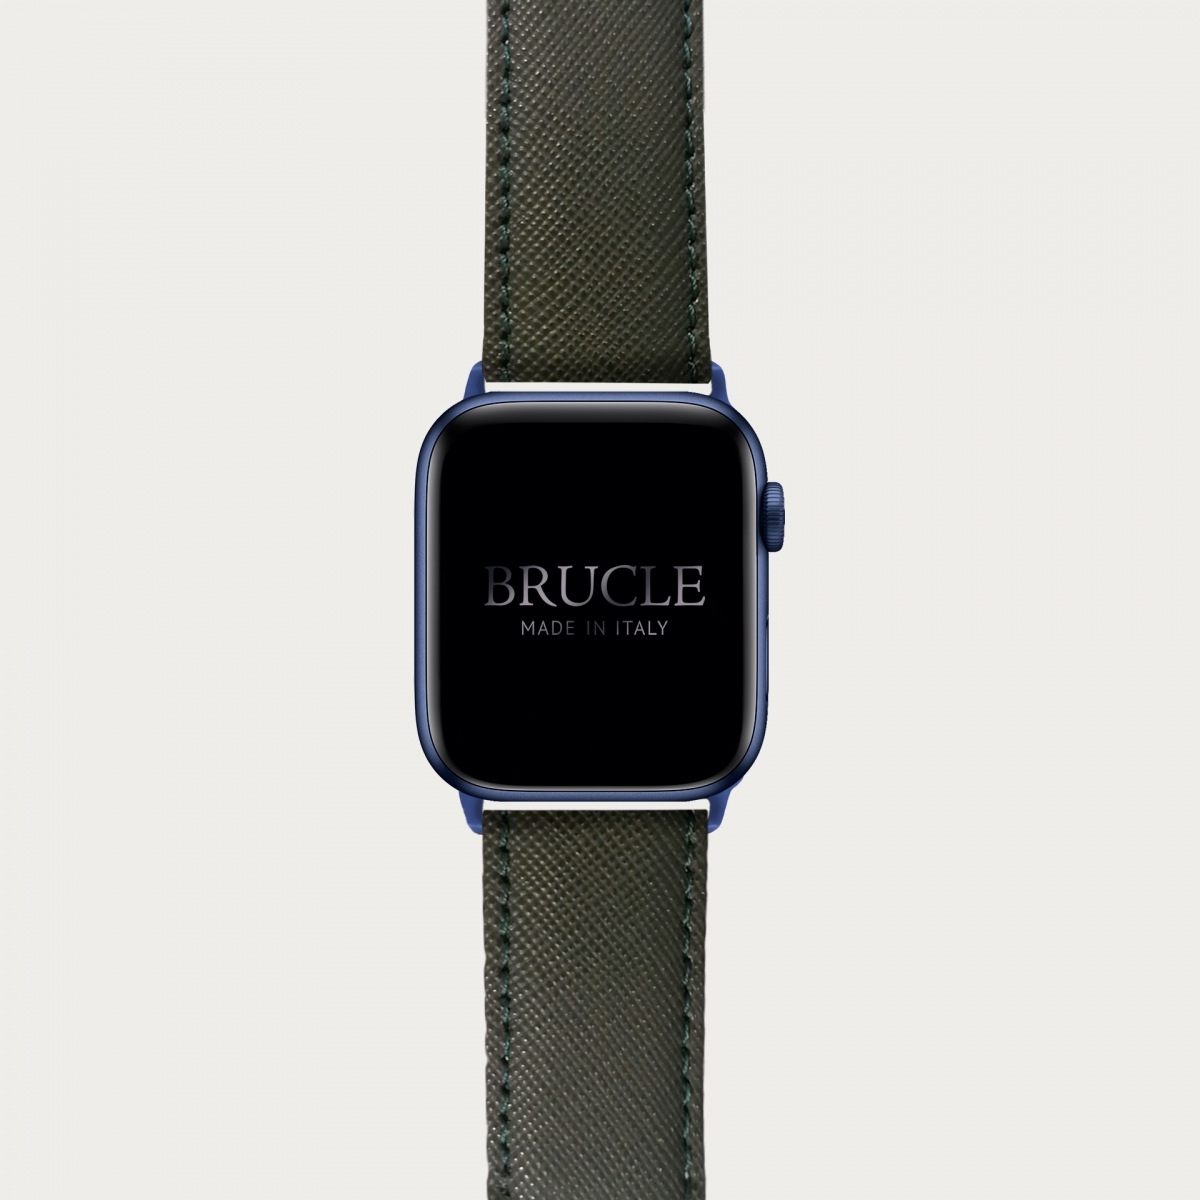 Armband kompatibel mit Apple Watch / Samsung Smartwatch, Militärgrün, leder mit Saffiano-print